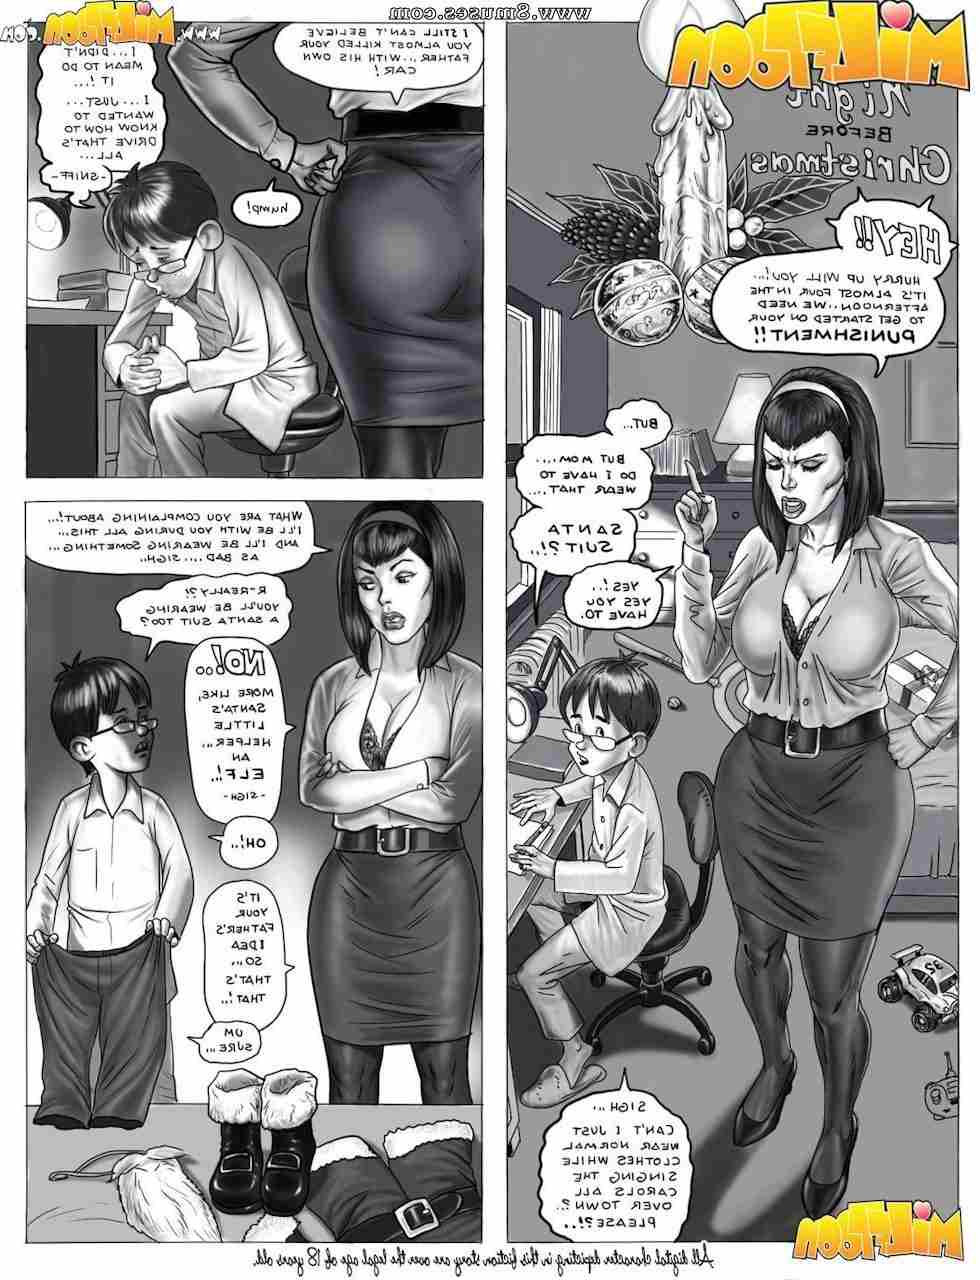 MilfToon-Comics/Xmas Xmas__8muses_-_Sex_and_Porn_Comics.jpg